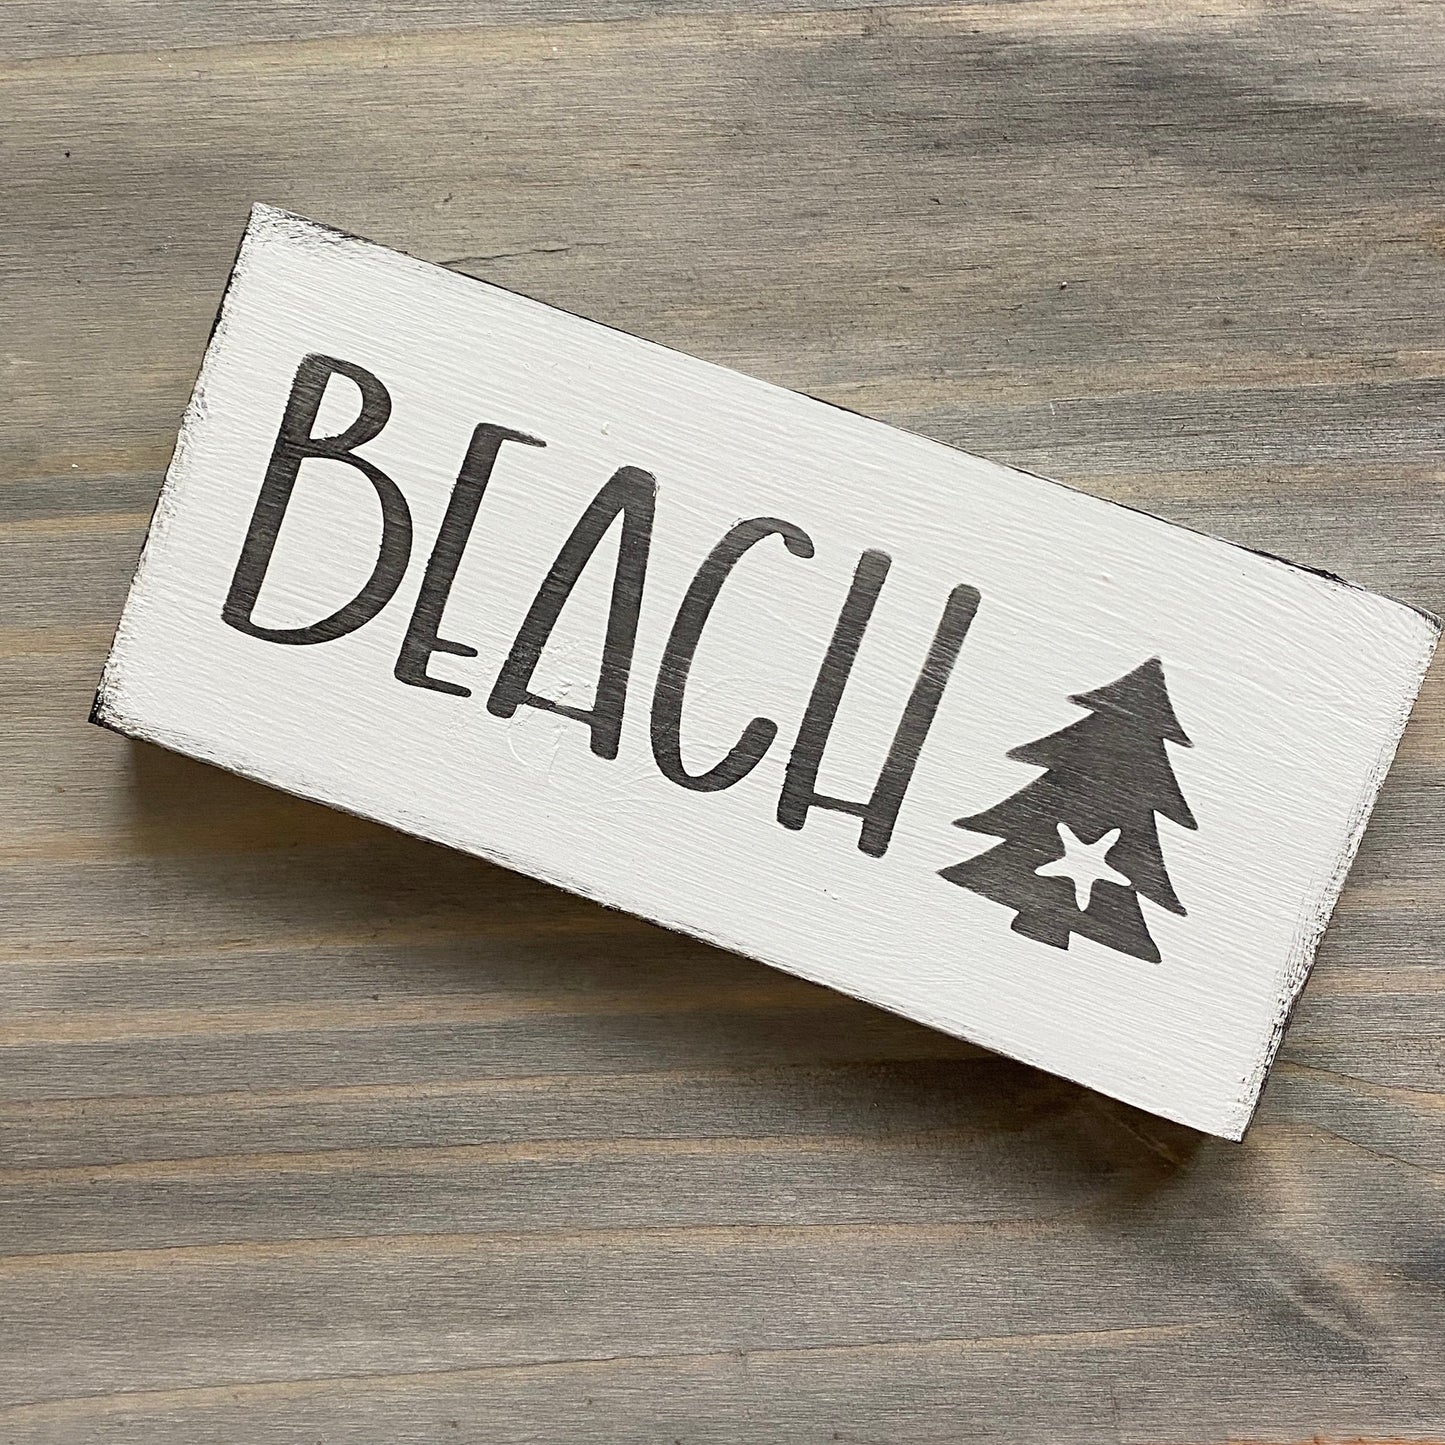 Coastal Christmas Decor, Anchored Soul Designs Beach Christmas wood sign with small tree and starfish white background with aqua design, beach house holiday decor coastal design